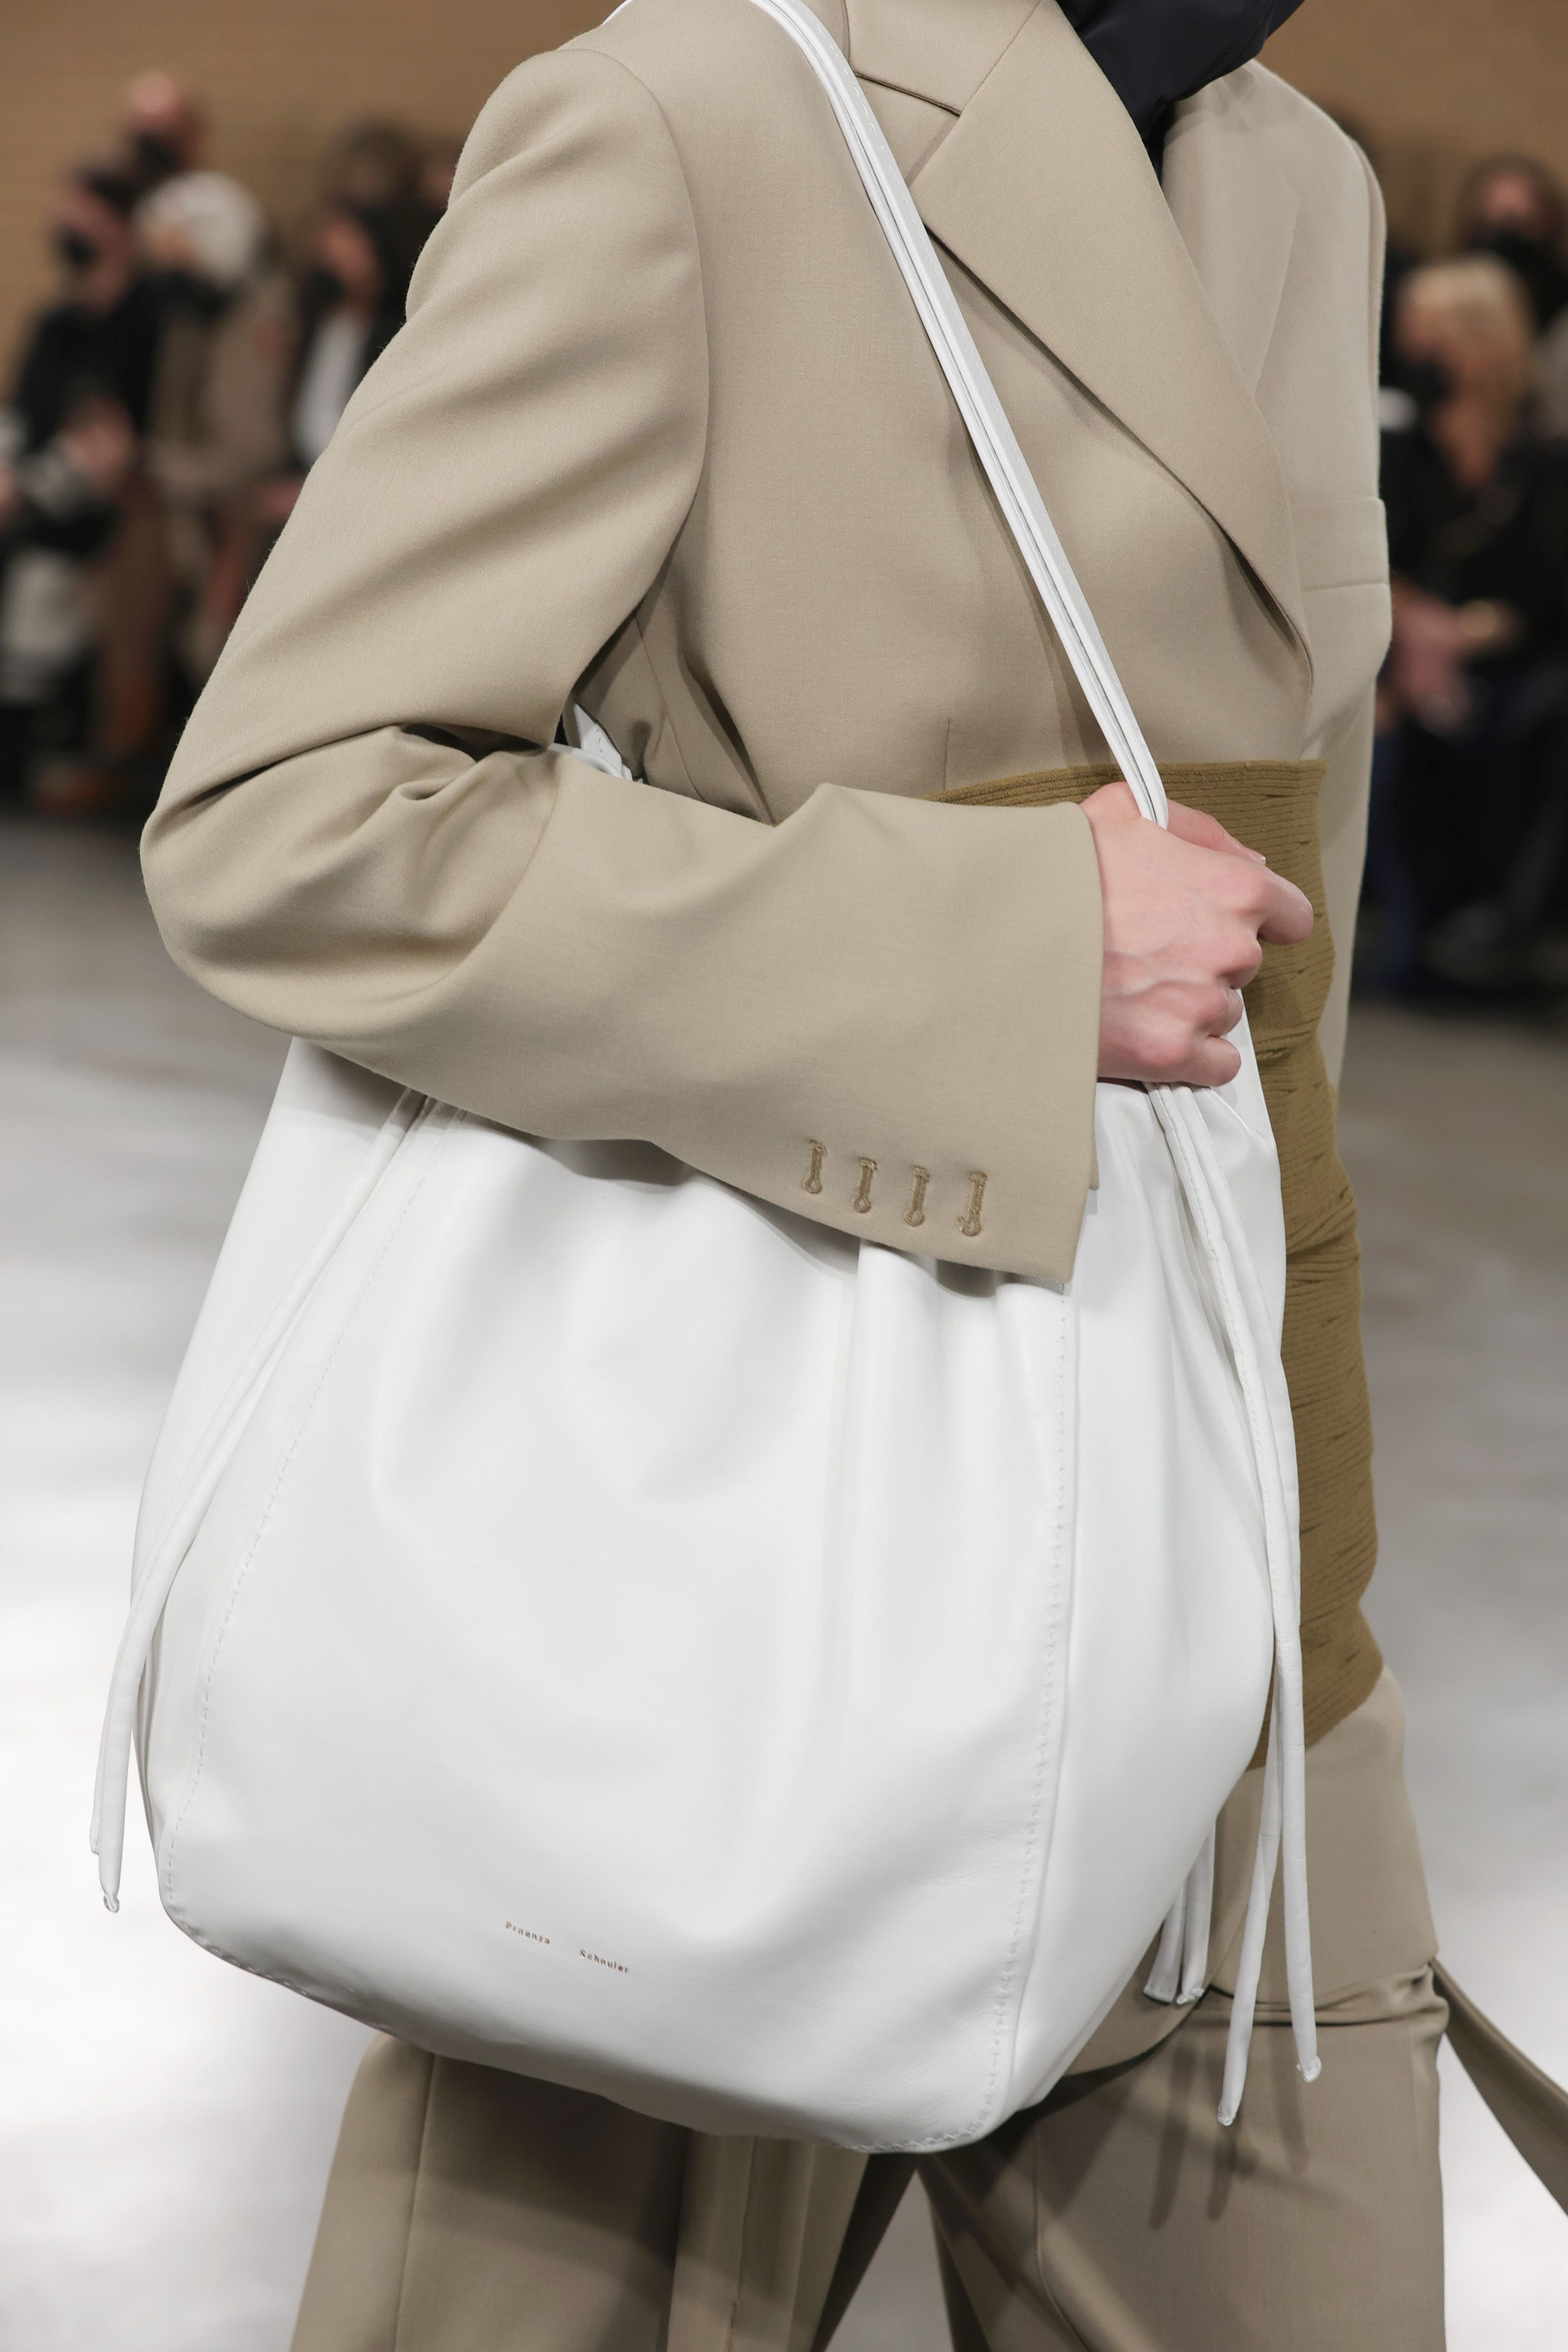 Bundling Handbag Trend 2022 - Carrying Two Handbags Trend